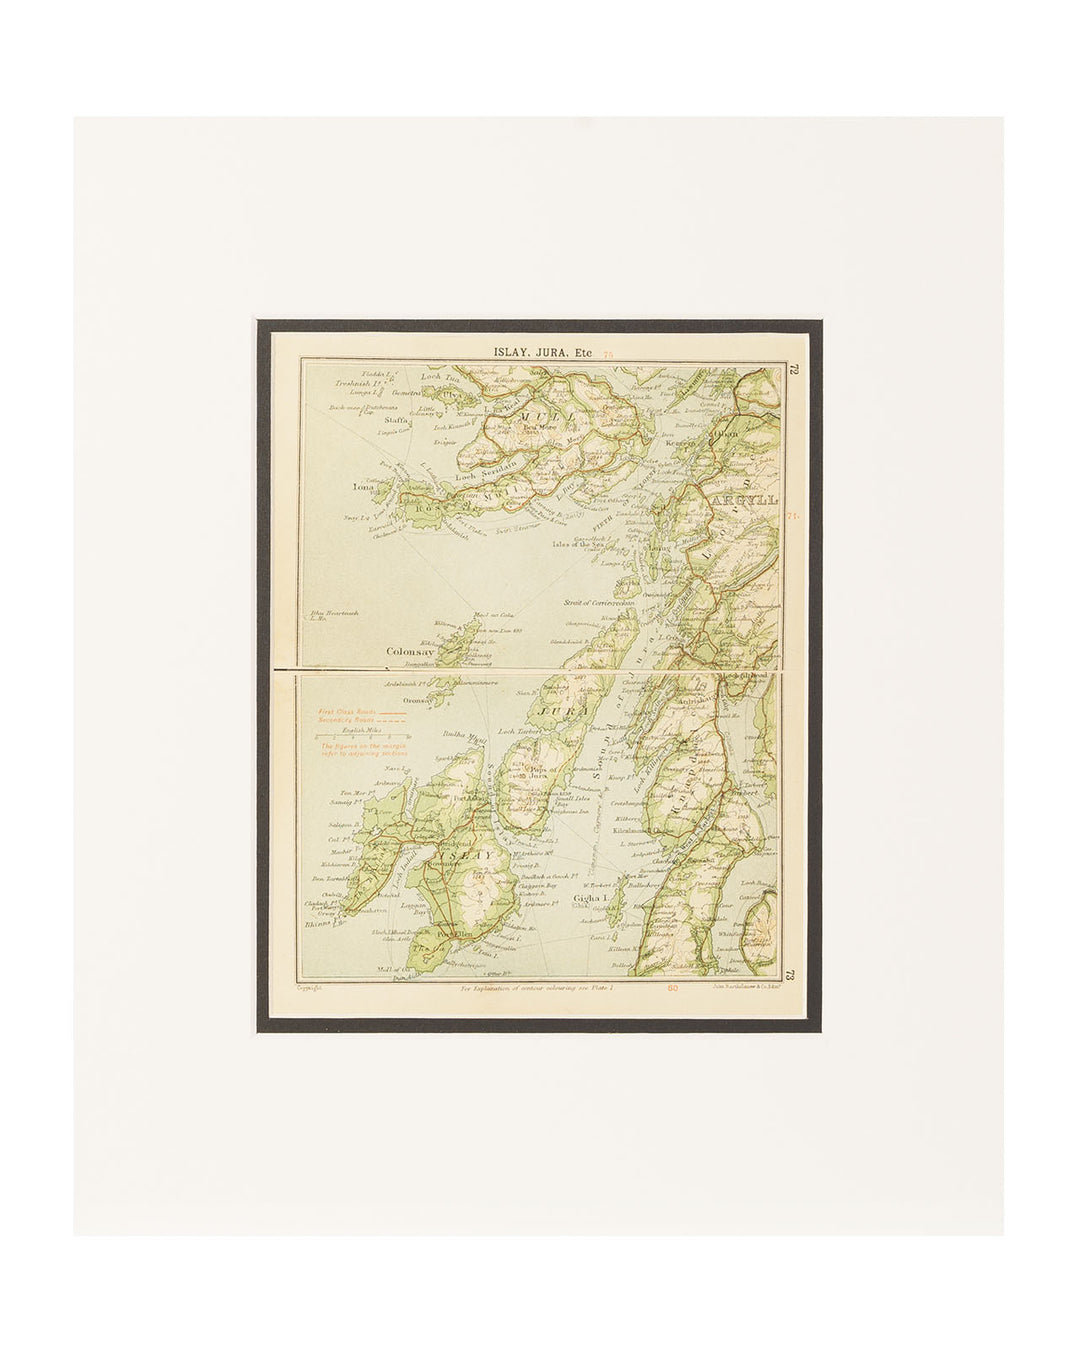 Authentic Topographical Map of Islay, Jura, Etc. by John Bartholomew c. 1914